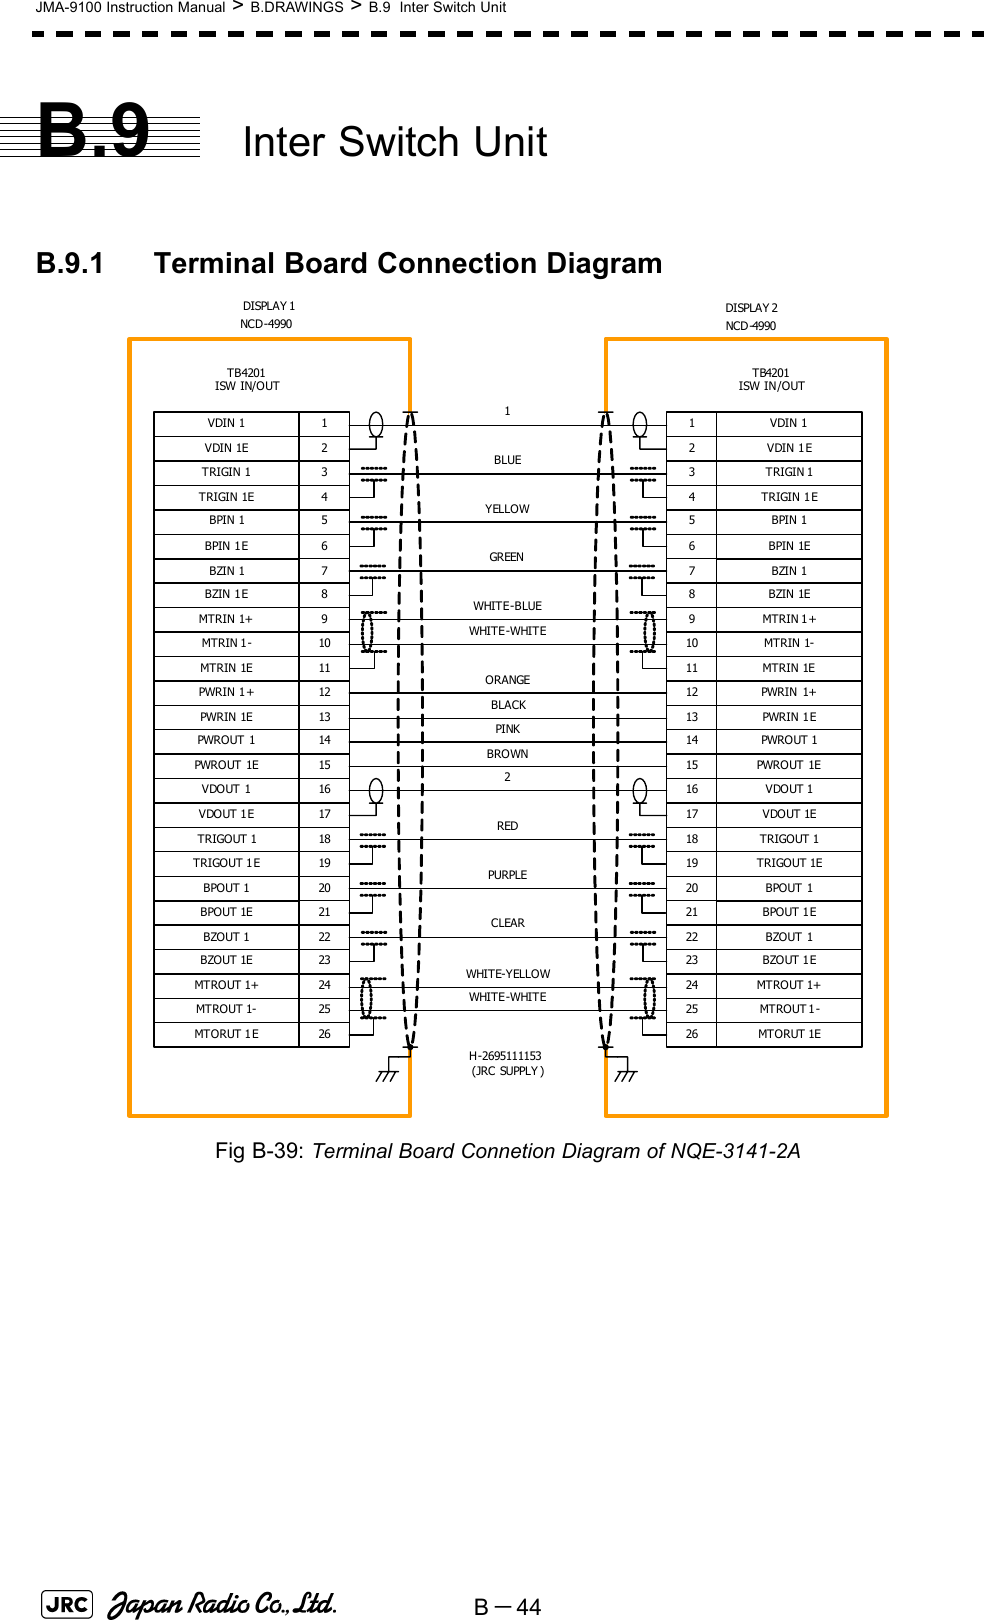 B－44JMA-9100 Instruction Manual &gt; B.DRAWINGS &gt; B.9  Inter Switch UnitB.9 Inter Switch UnitB.9.1 Terminal Board Connection DiagramFig B-39: Terminal Board Connetion Diagram of NQE-3141-2AVDIN 1VDIN 1ETRIGIN 1TRIGIN 1EBPIN 1BPIN 1EBZIN 1MTRIN 1+MTRIN 1-BZIN 1EMTRIN 1EPWRIN 1+PWRIN 1 EPWROUT 1PWROUT 1EVDOUT 1VDOUT 1ETRIGOUT 1TRIGOUT 1EBPOUT 1BPOUT 1EBZOUT 1EMTROUT 1+BZOUT 1MTROUT 1 -MTORUT 1E1234567891011121314151617181920212223242526VDIN 1VDIN 1ETRIGIN 1TRIGIN 1EBPIN 1BPIN 1EBZIN 1MTRIN 1+MTRIN 1-BZIN 1EMTRIN 1EPWRIN 1 +PWRIN 1EPWROUT 1PWROUT 1EVDOUT 1VDOUT 1ETRIGOUT 1TRIGOUT 1EBPOUT 1BPOUT 1EBZOUT 1EMTROUT 1+BZOUT 1MTROUT 1-MTORUT 1E1234567891011121314151617181920212223242526TB4201ISW IN/OUTTB4201ISW IN/OUTDISPLAY 1 DISPLAY 212BLUEYELLOWGREENWHITE-BLUEWHITE-WHITEORANGEBLACKPINKBROWNREDPURPLECLEARWHITE-YELLOWWHITE-WHITENC D -4990 NC D -4990H -2695111153(JRC SUPPLY )